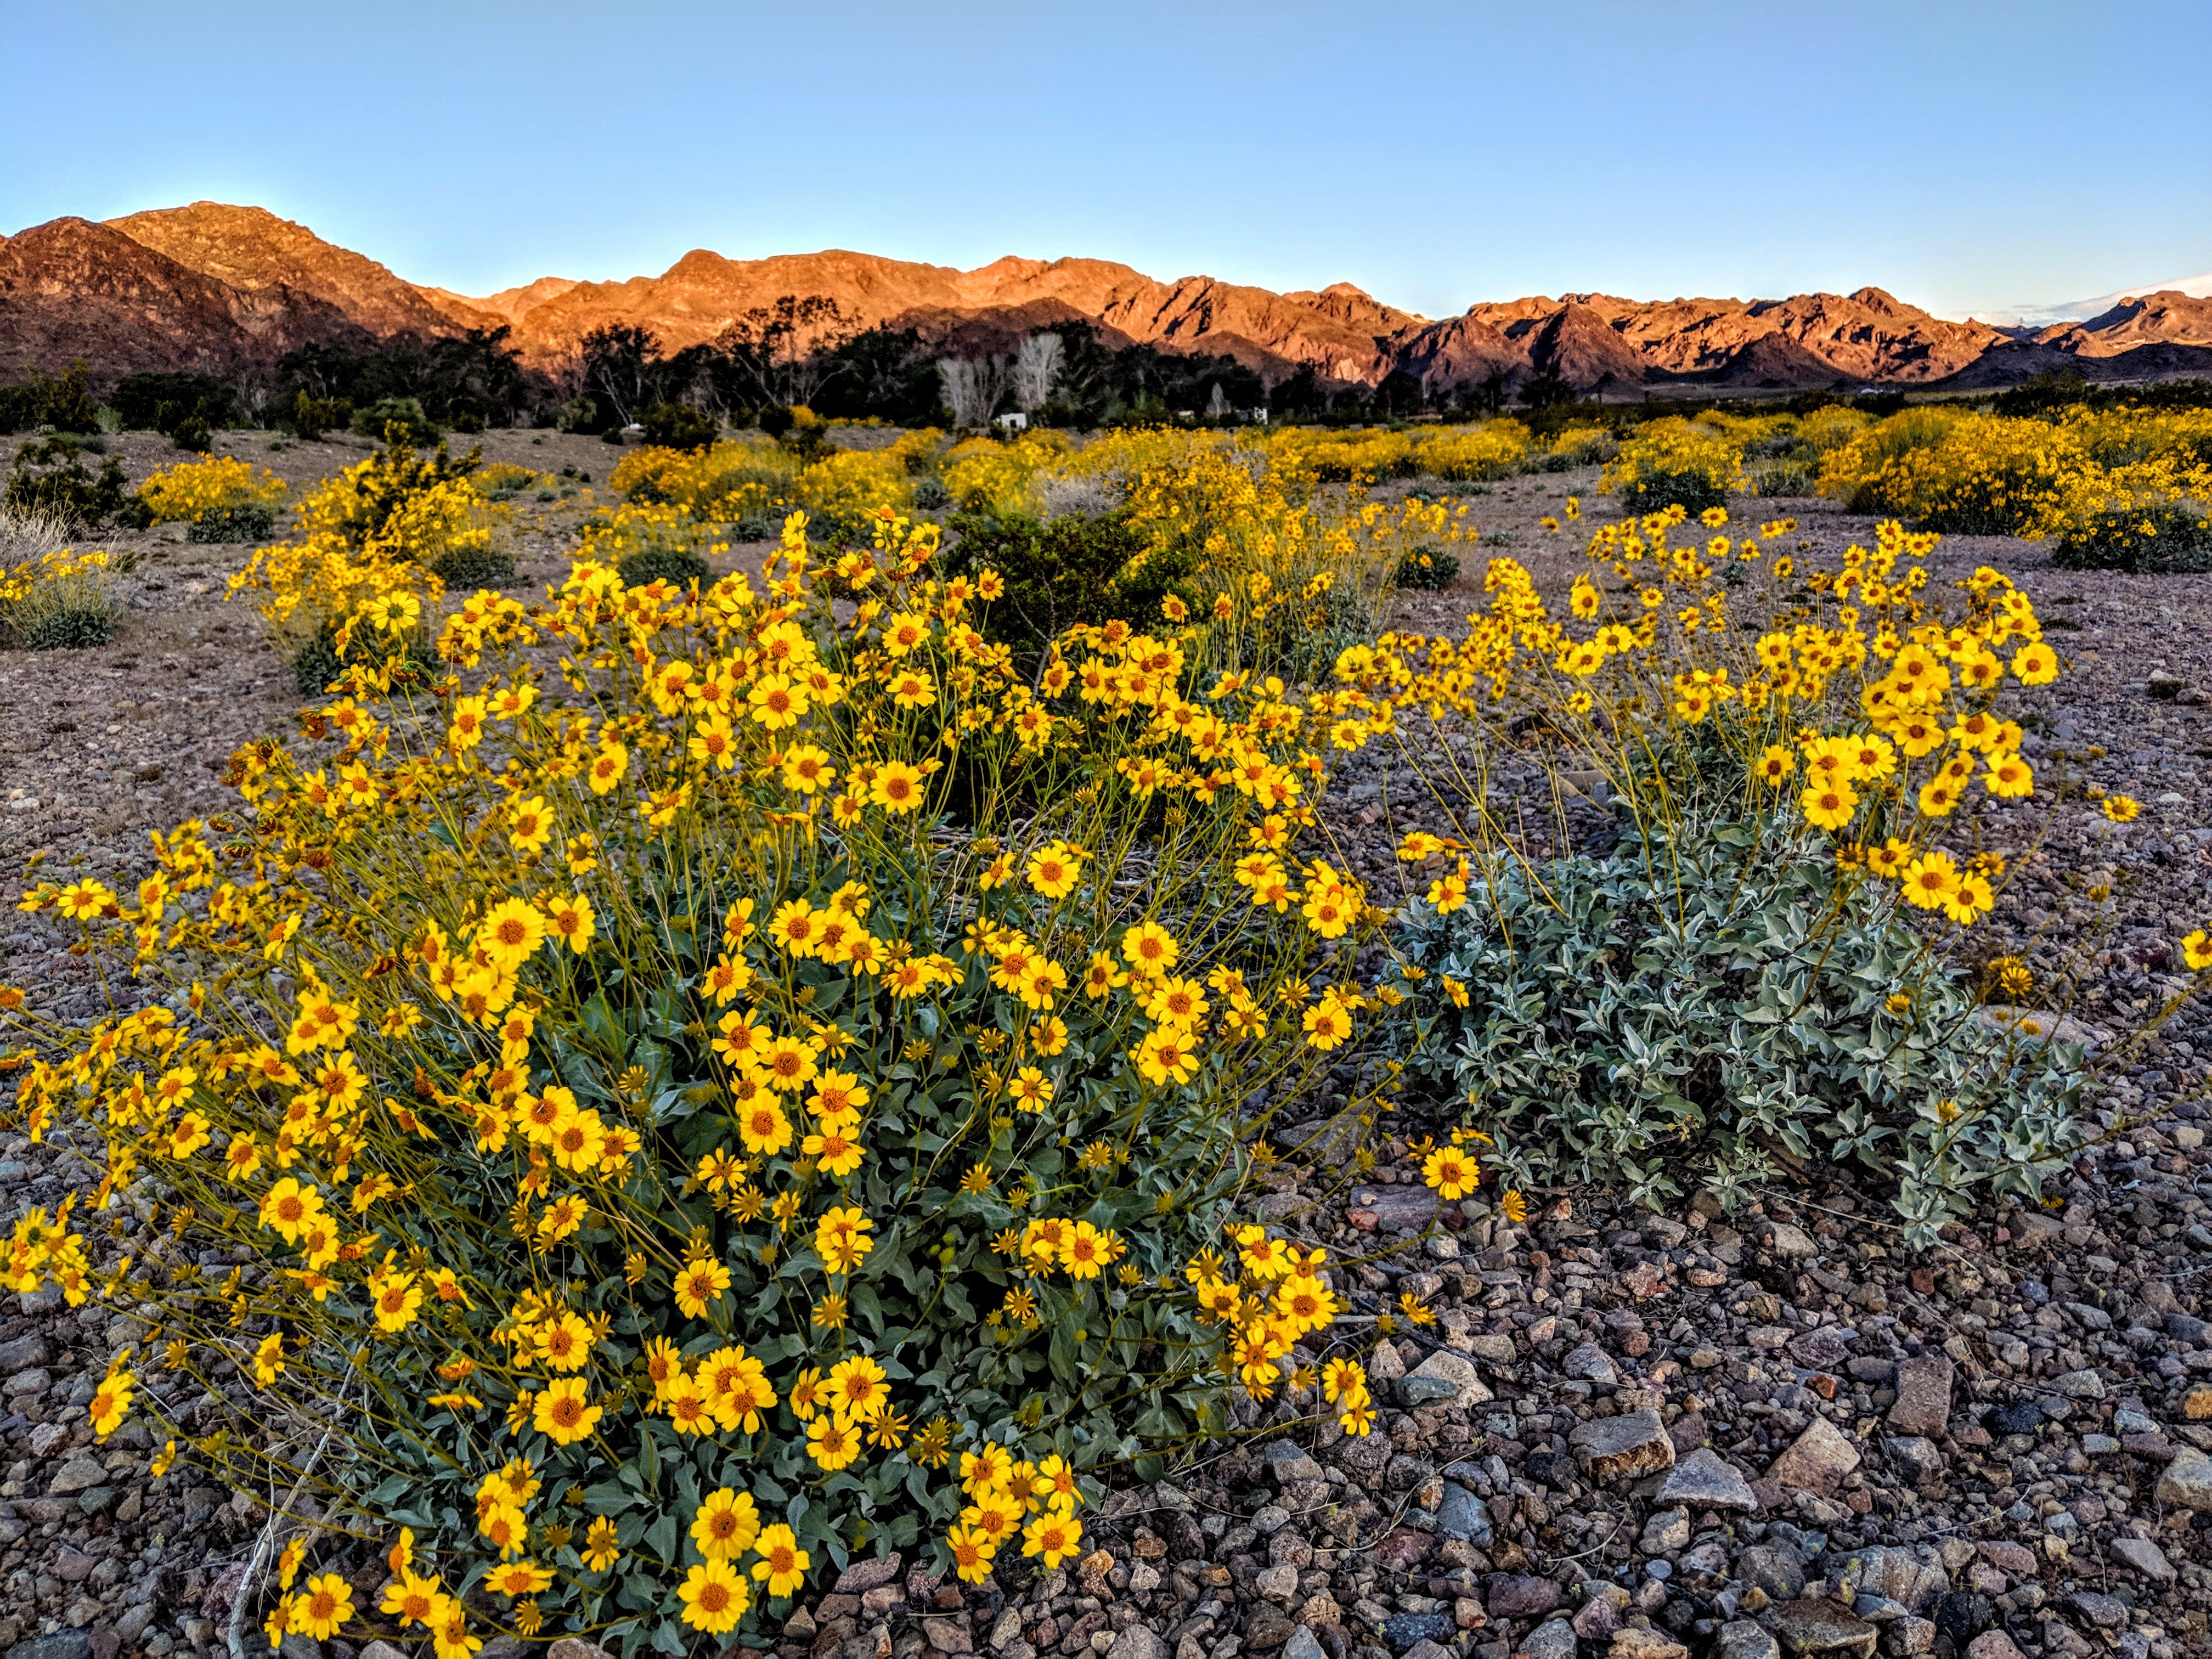 April is wildflower season across the state of Arizona!